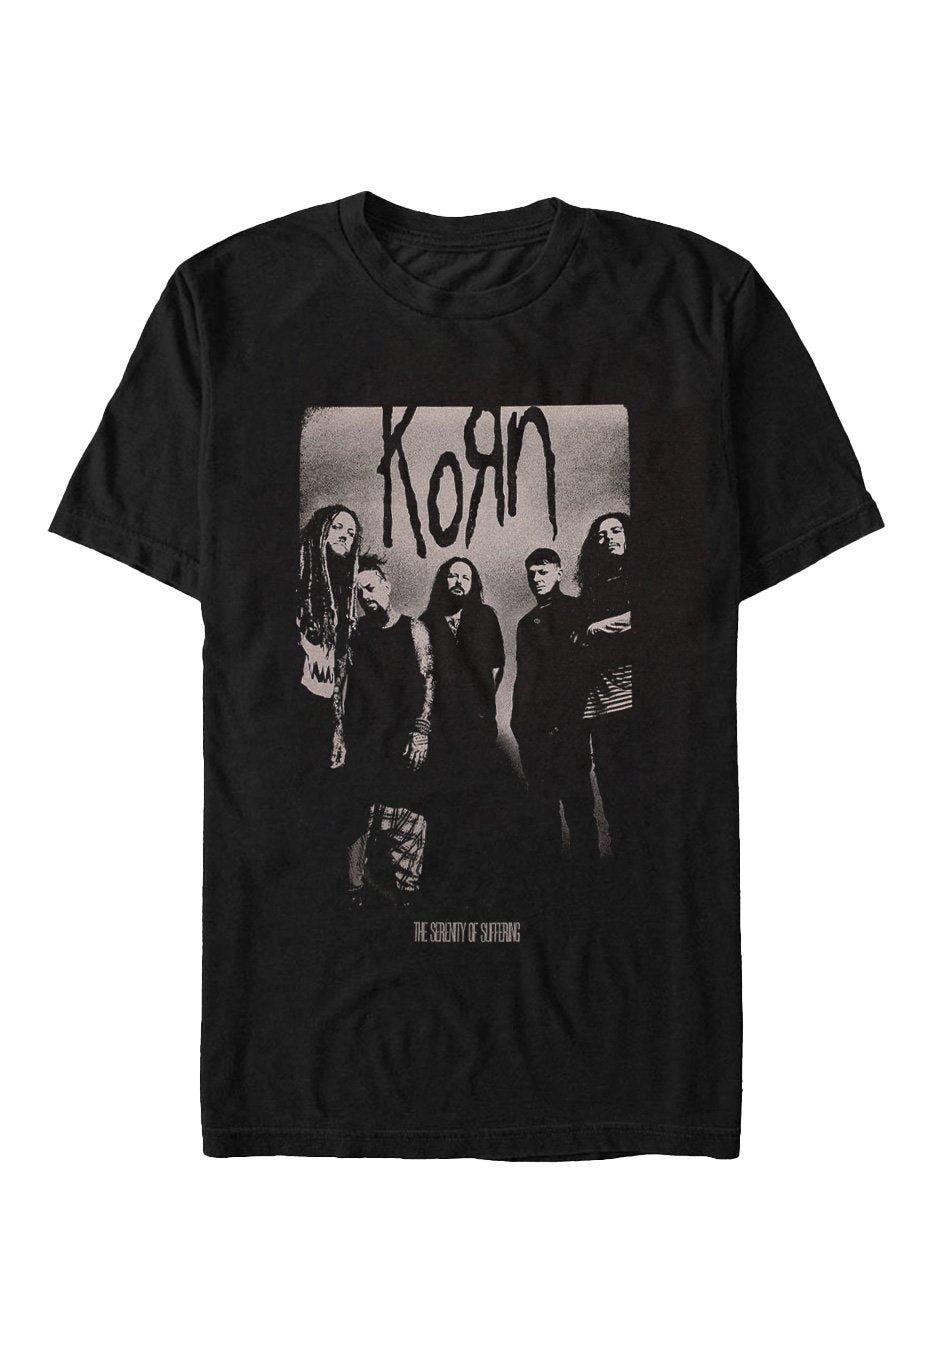 Korn - Knock Wall - T-Shirt